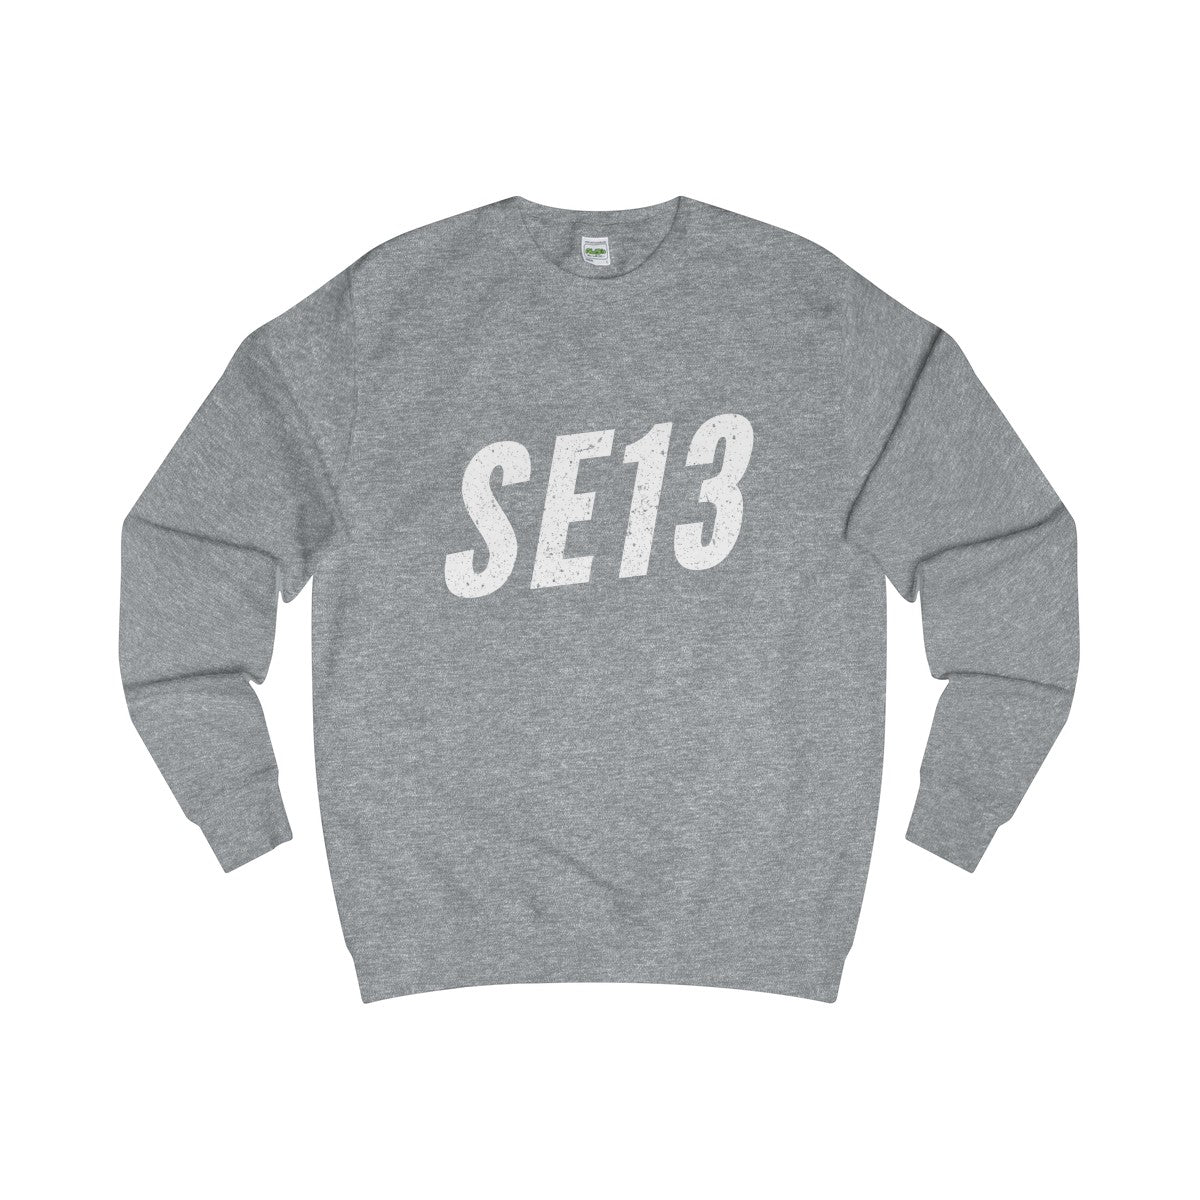 Ladywell SE13 Sweater